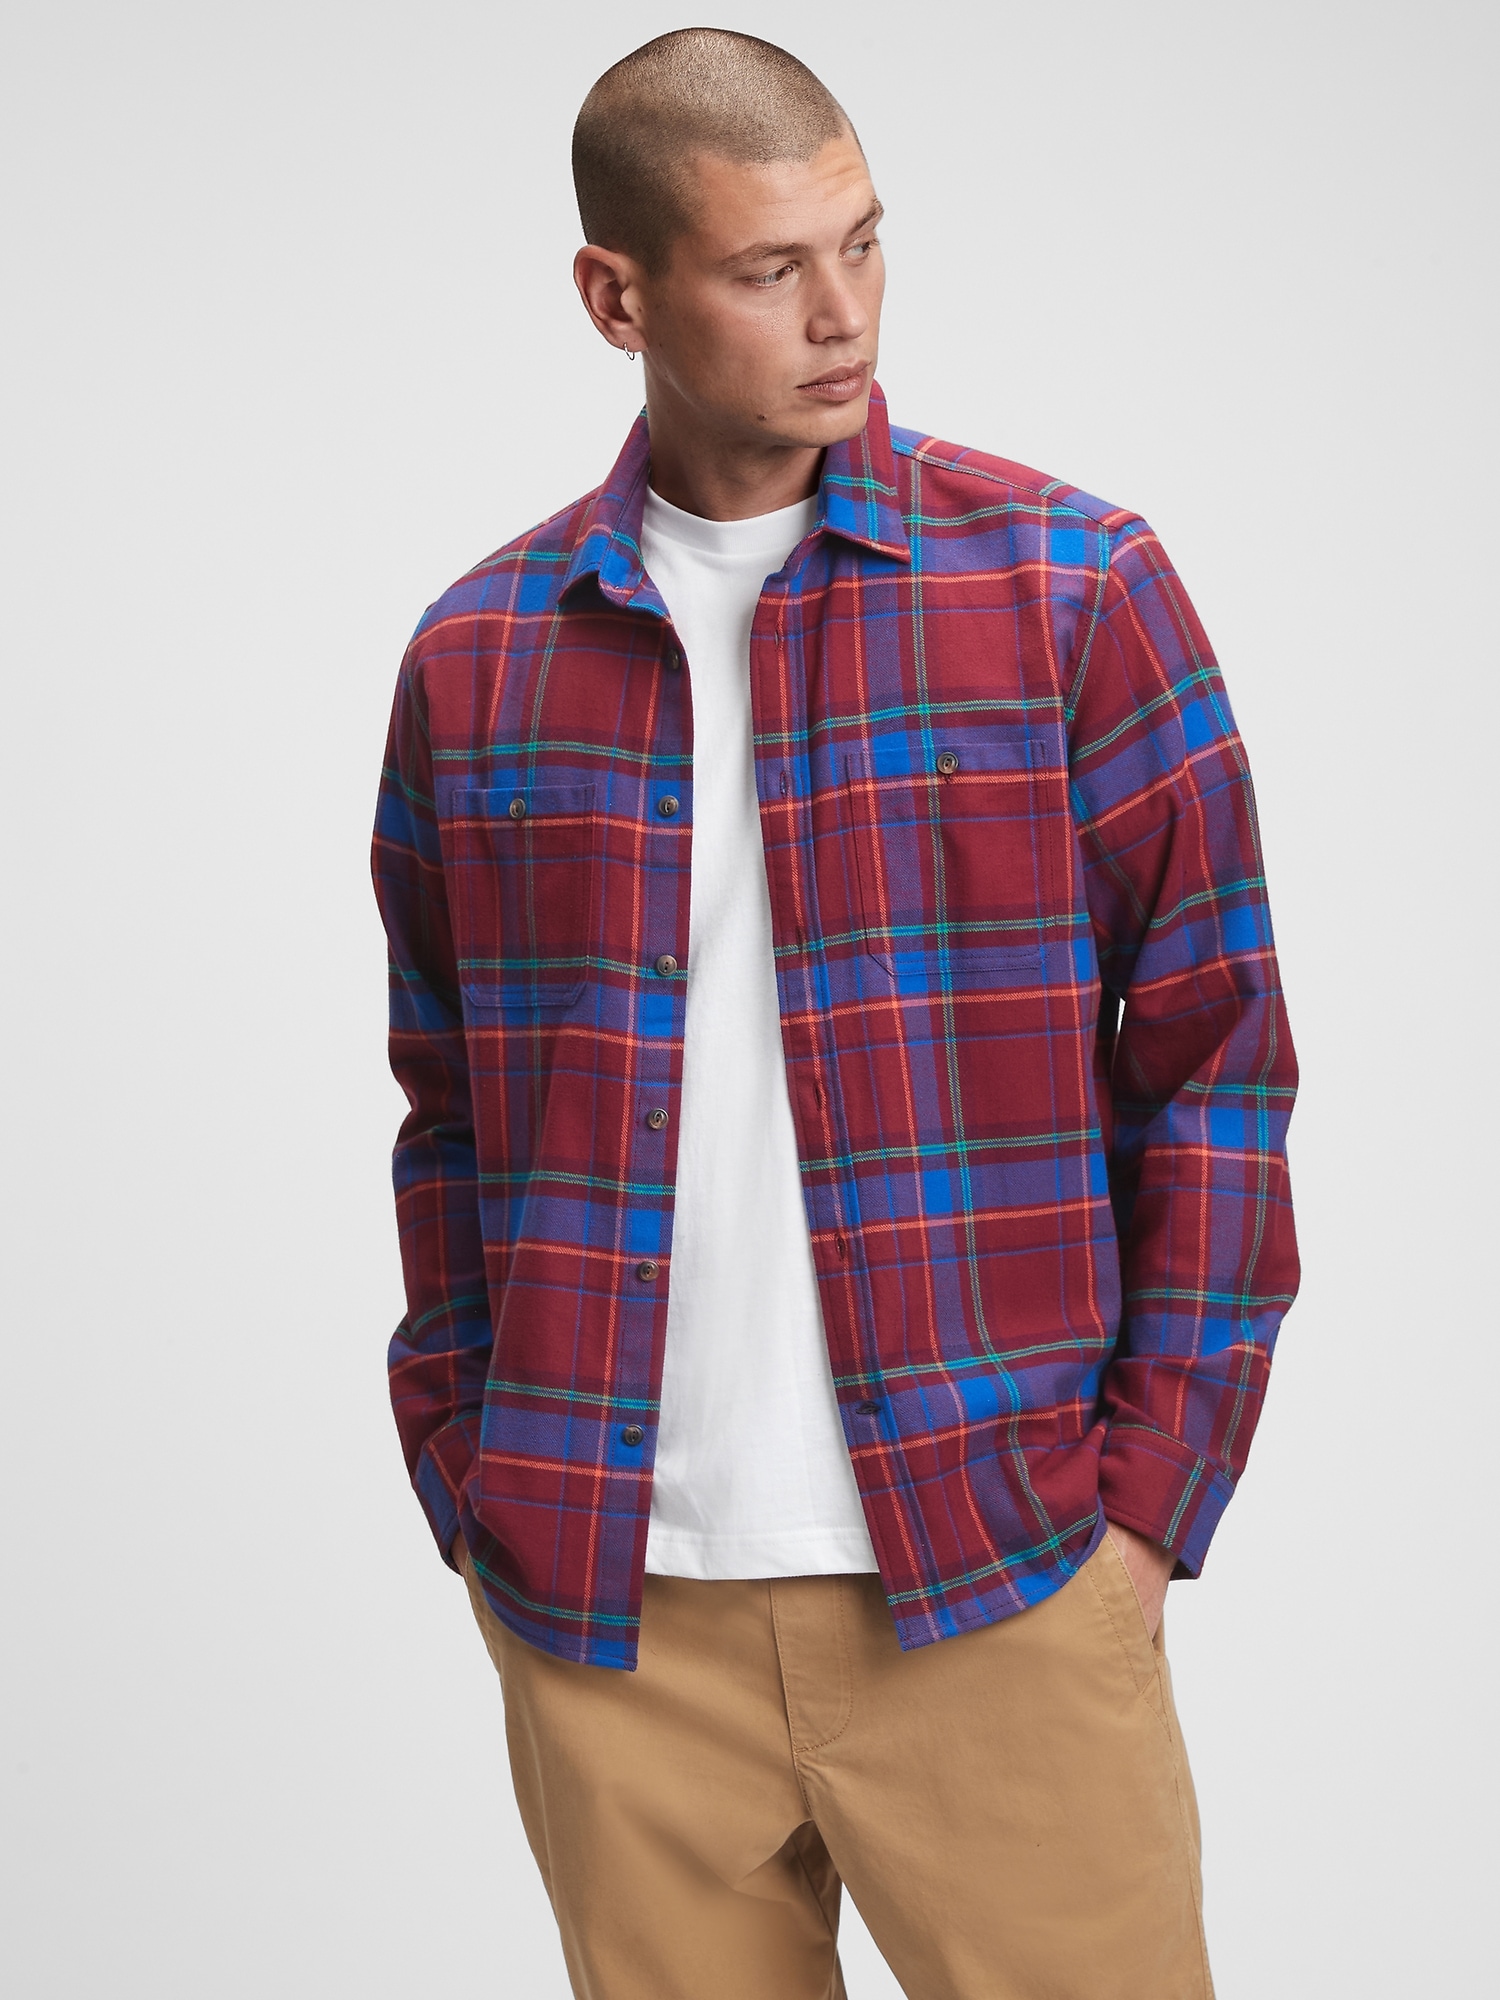 Gap Factory Men's Flannel Shirt in Untucked Fit only $8.99 | eDealinfo.com